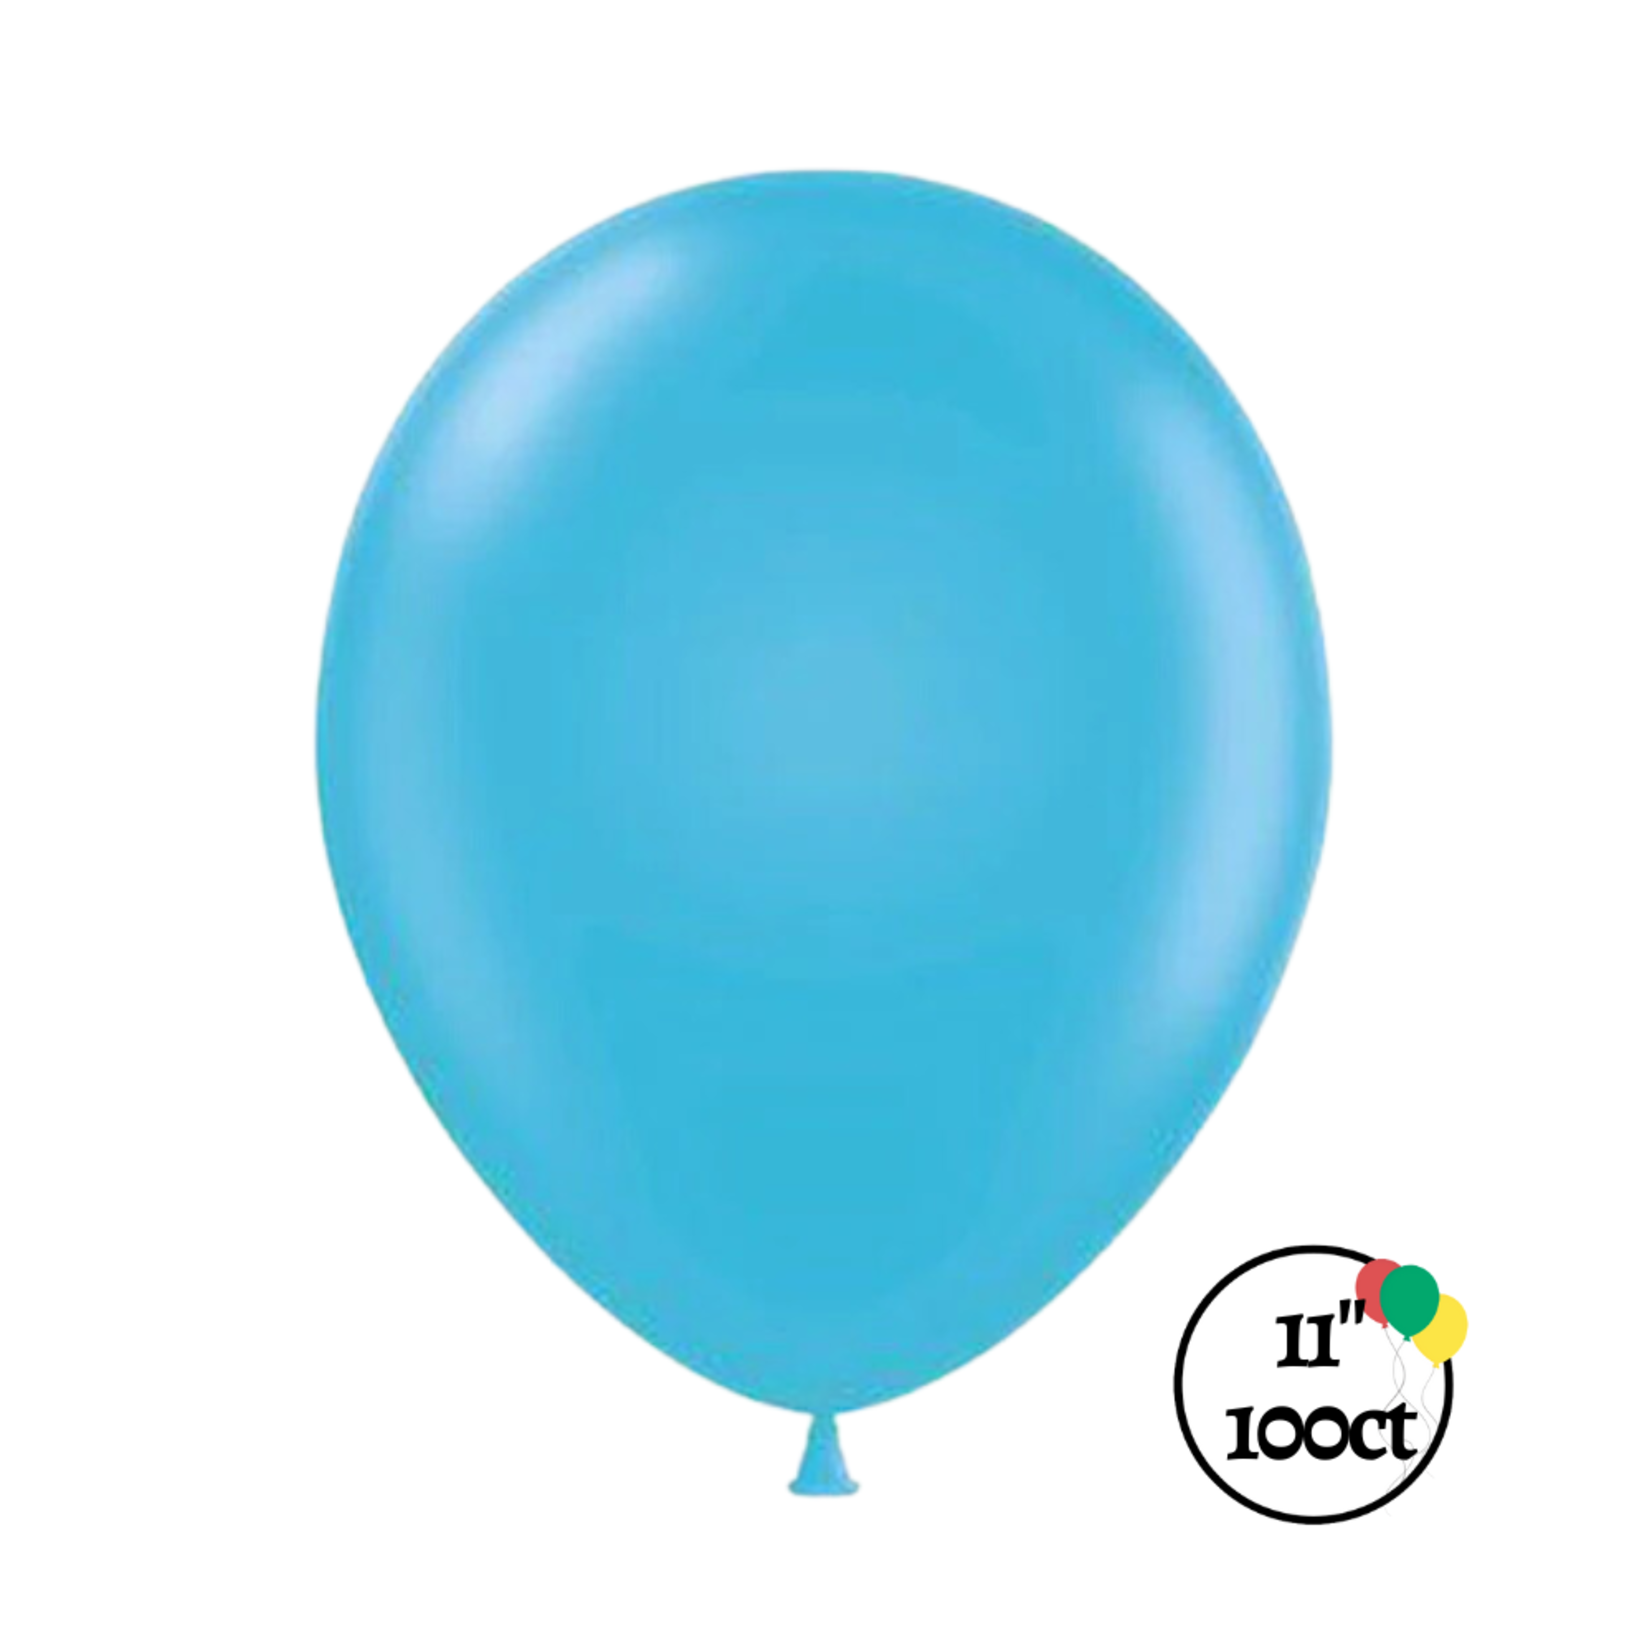 Tuftex 11" Tuftex Turquoise Balloon 100ct